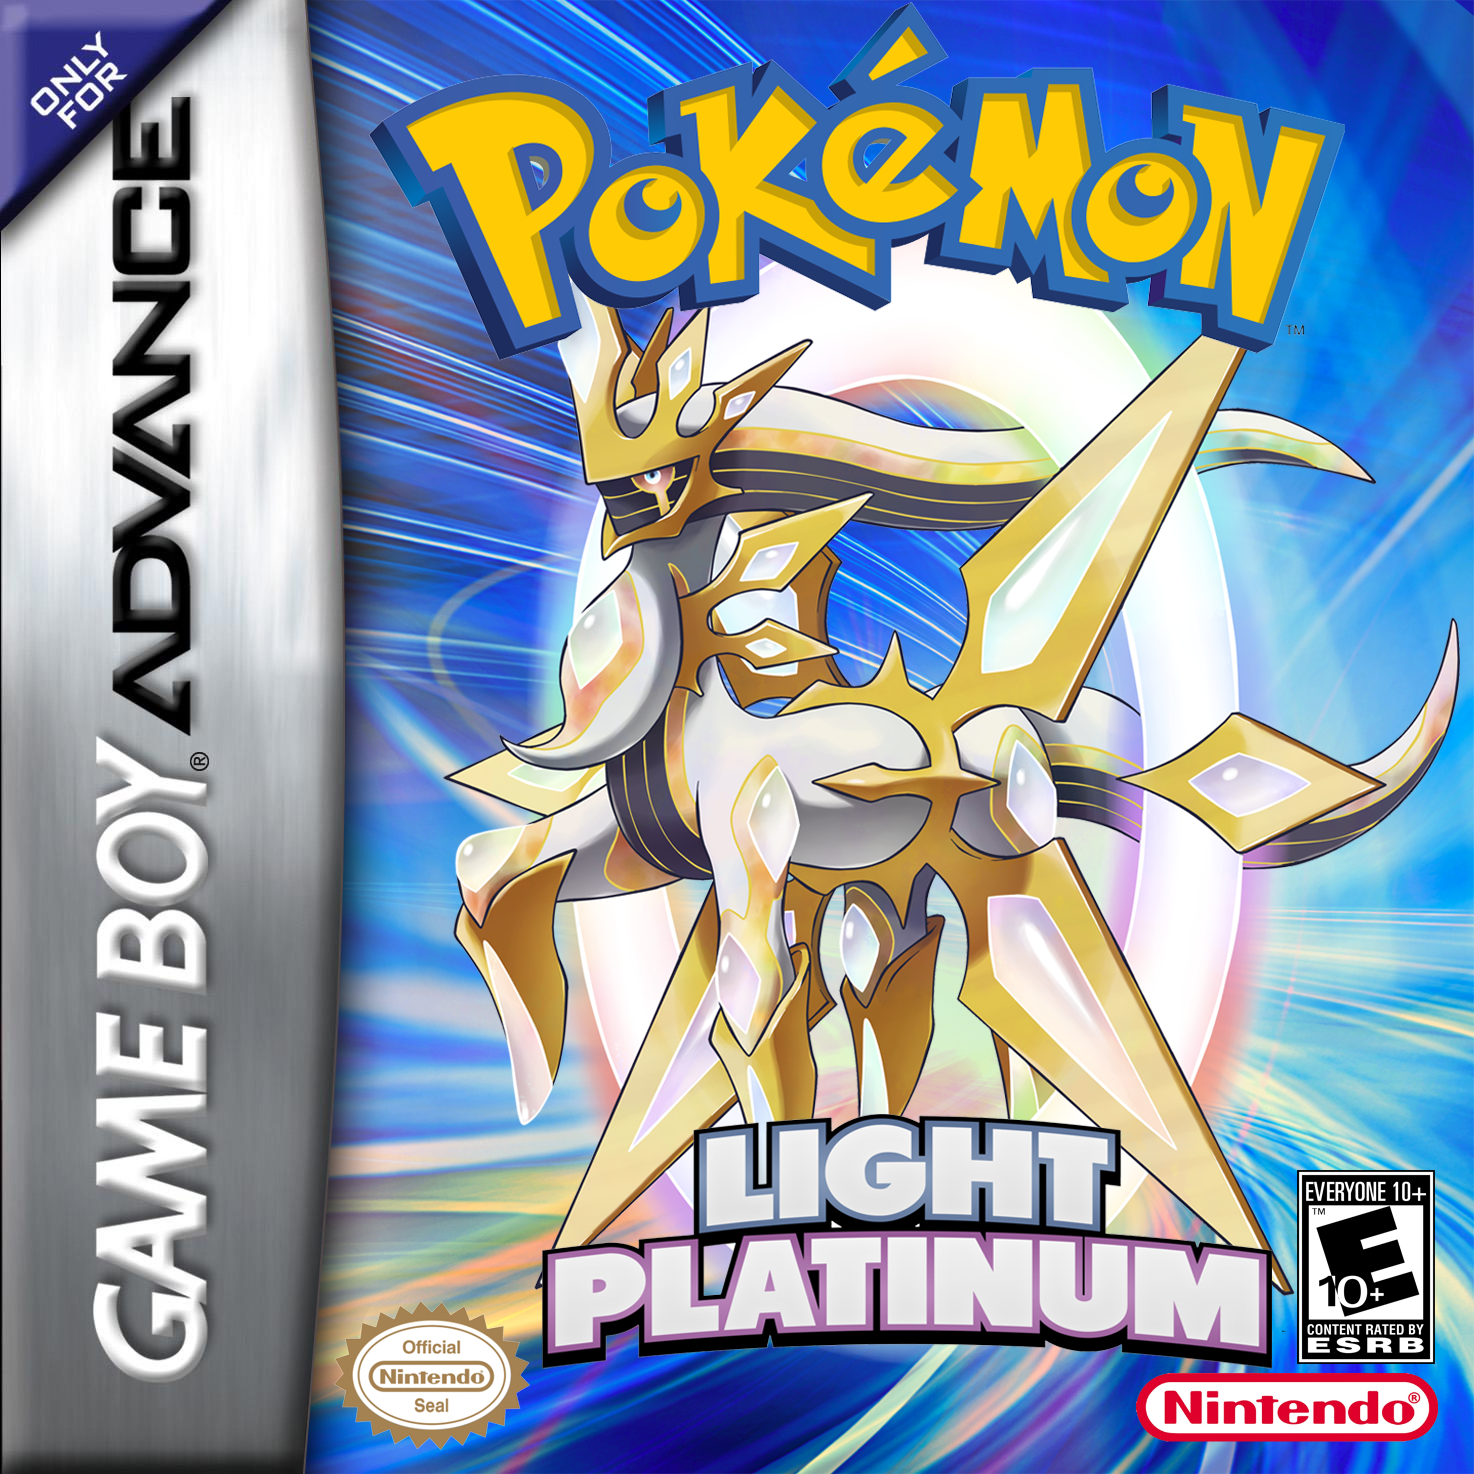 Pókemon Light Platinum box cover